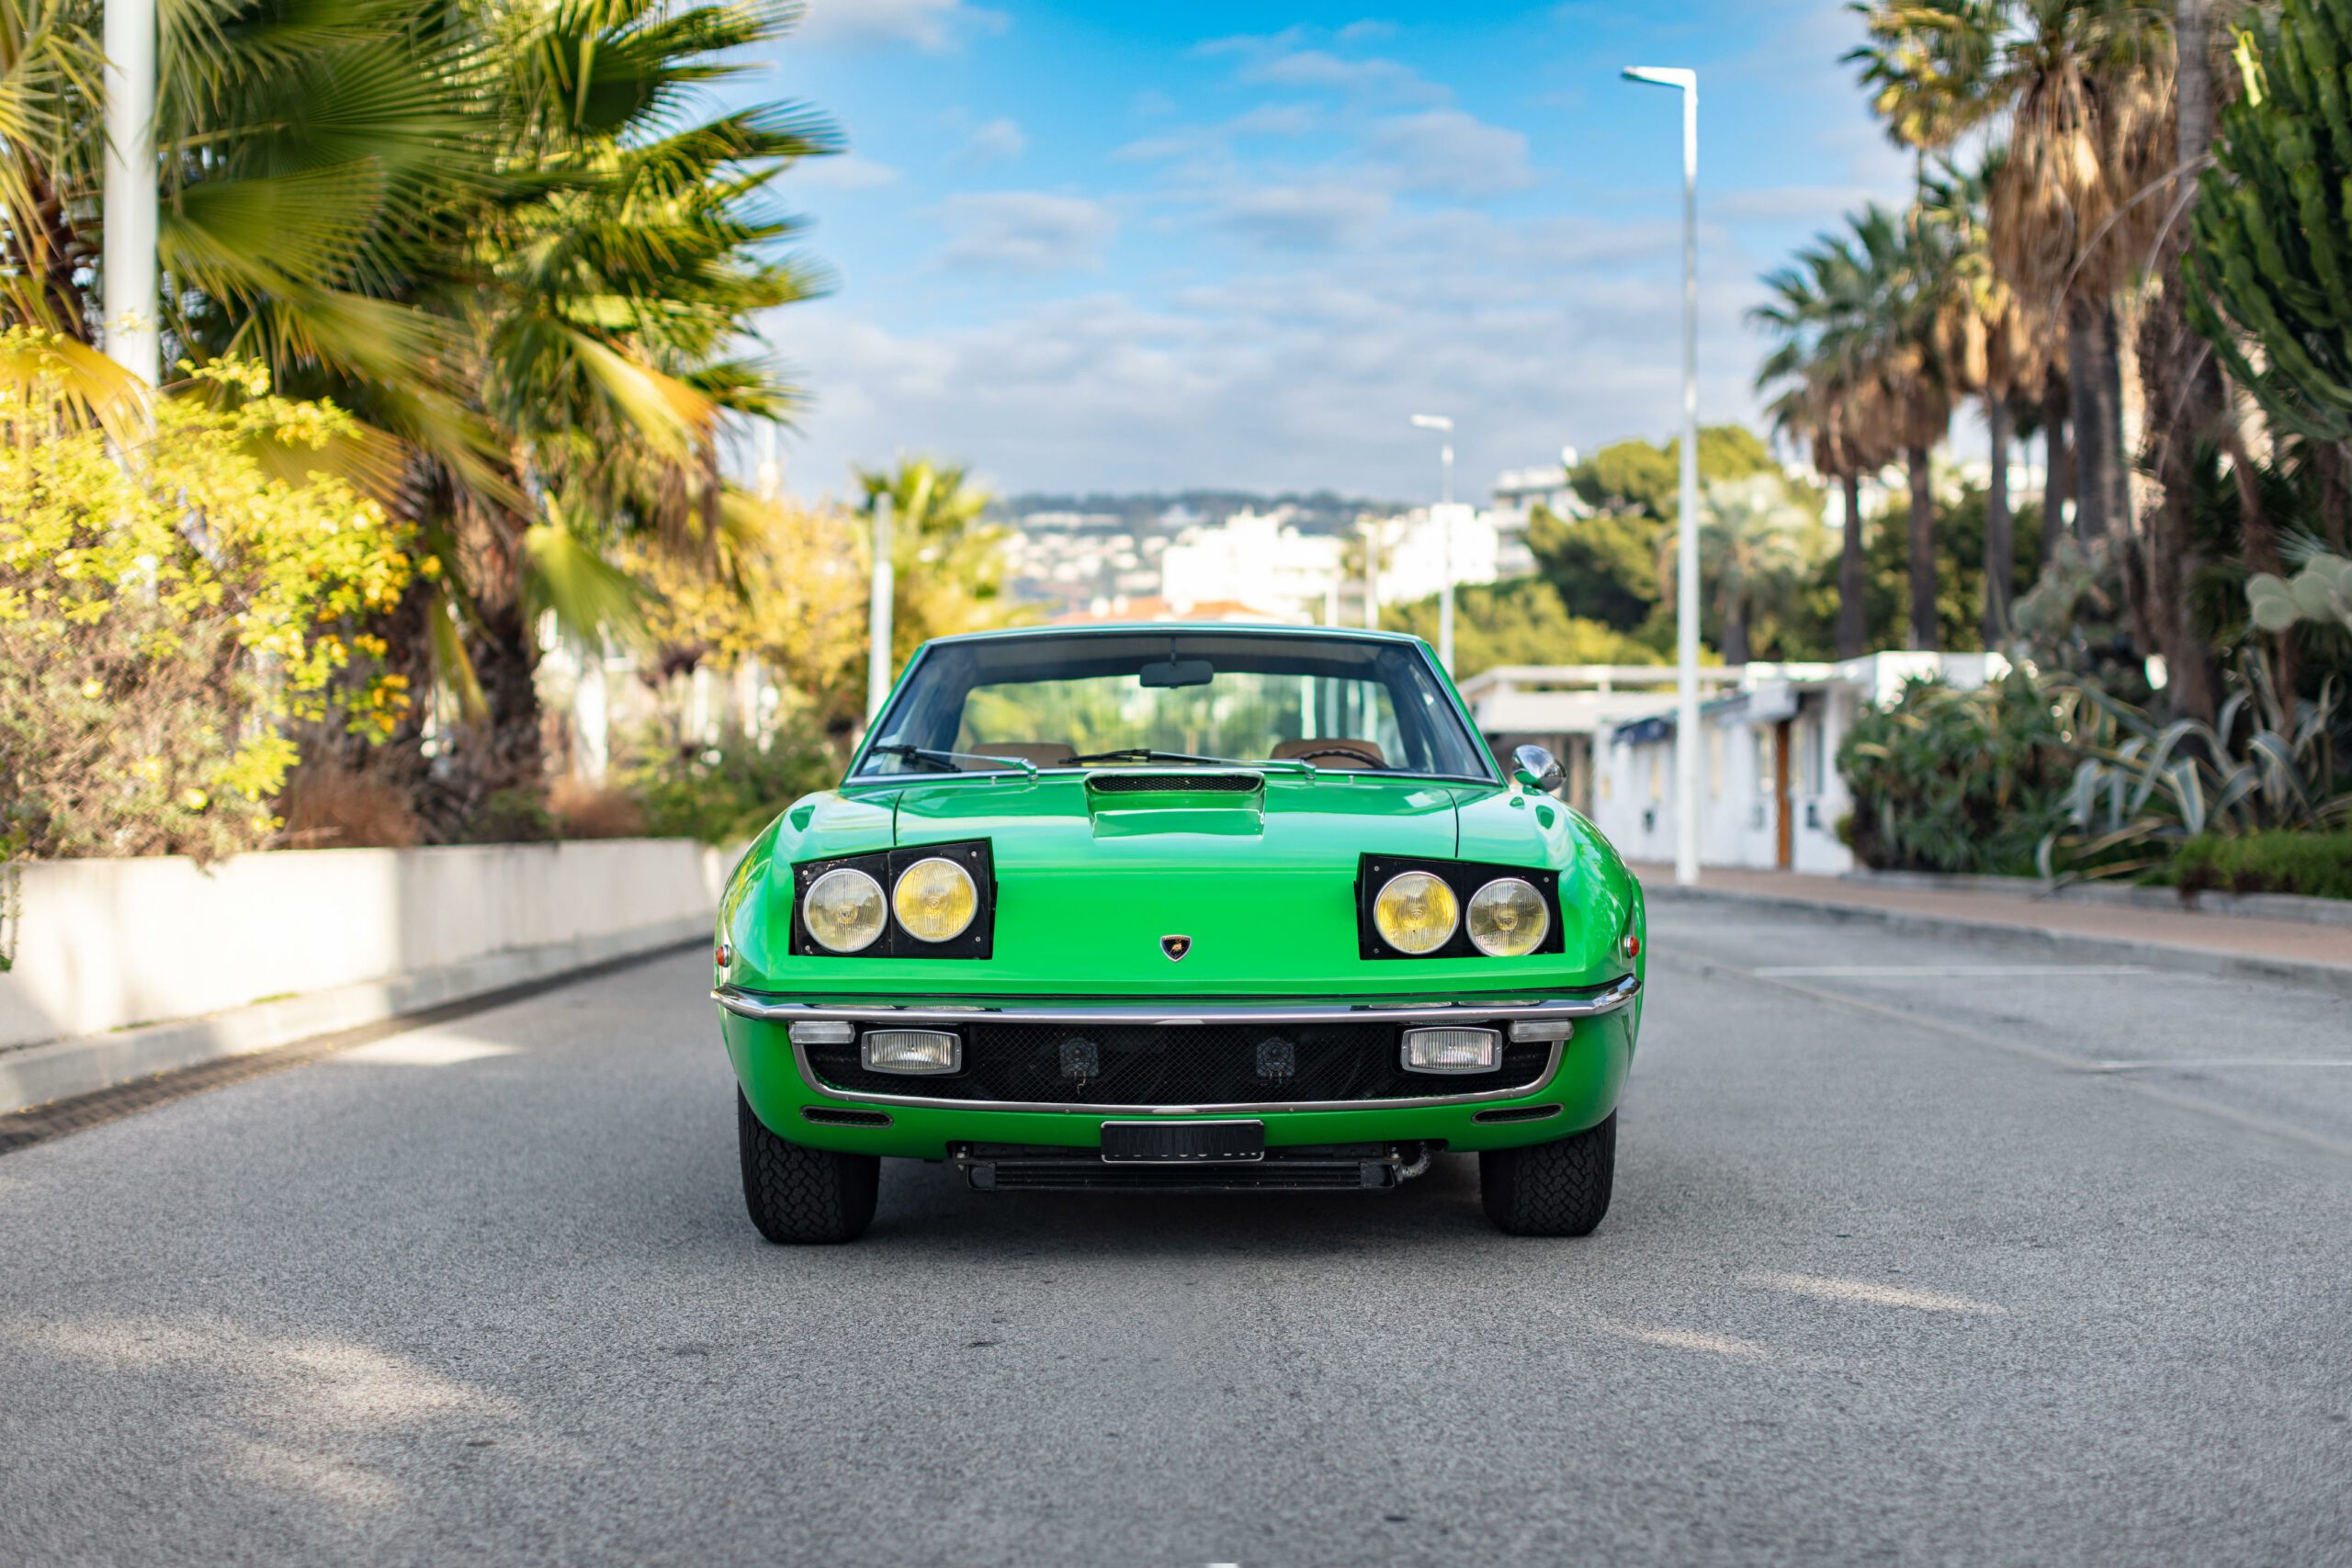 1969 Lamborghini Islero S Coupé